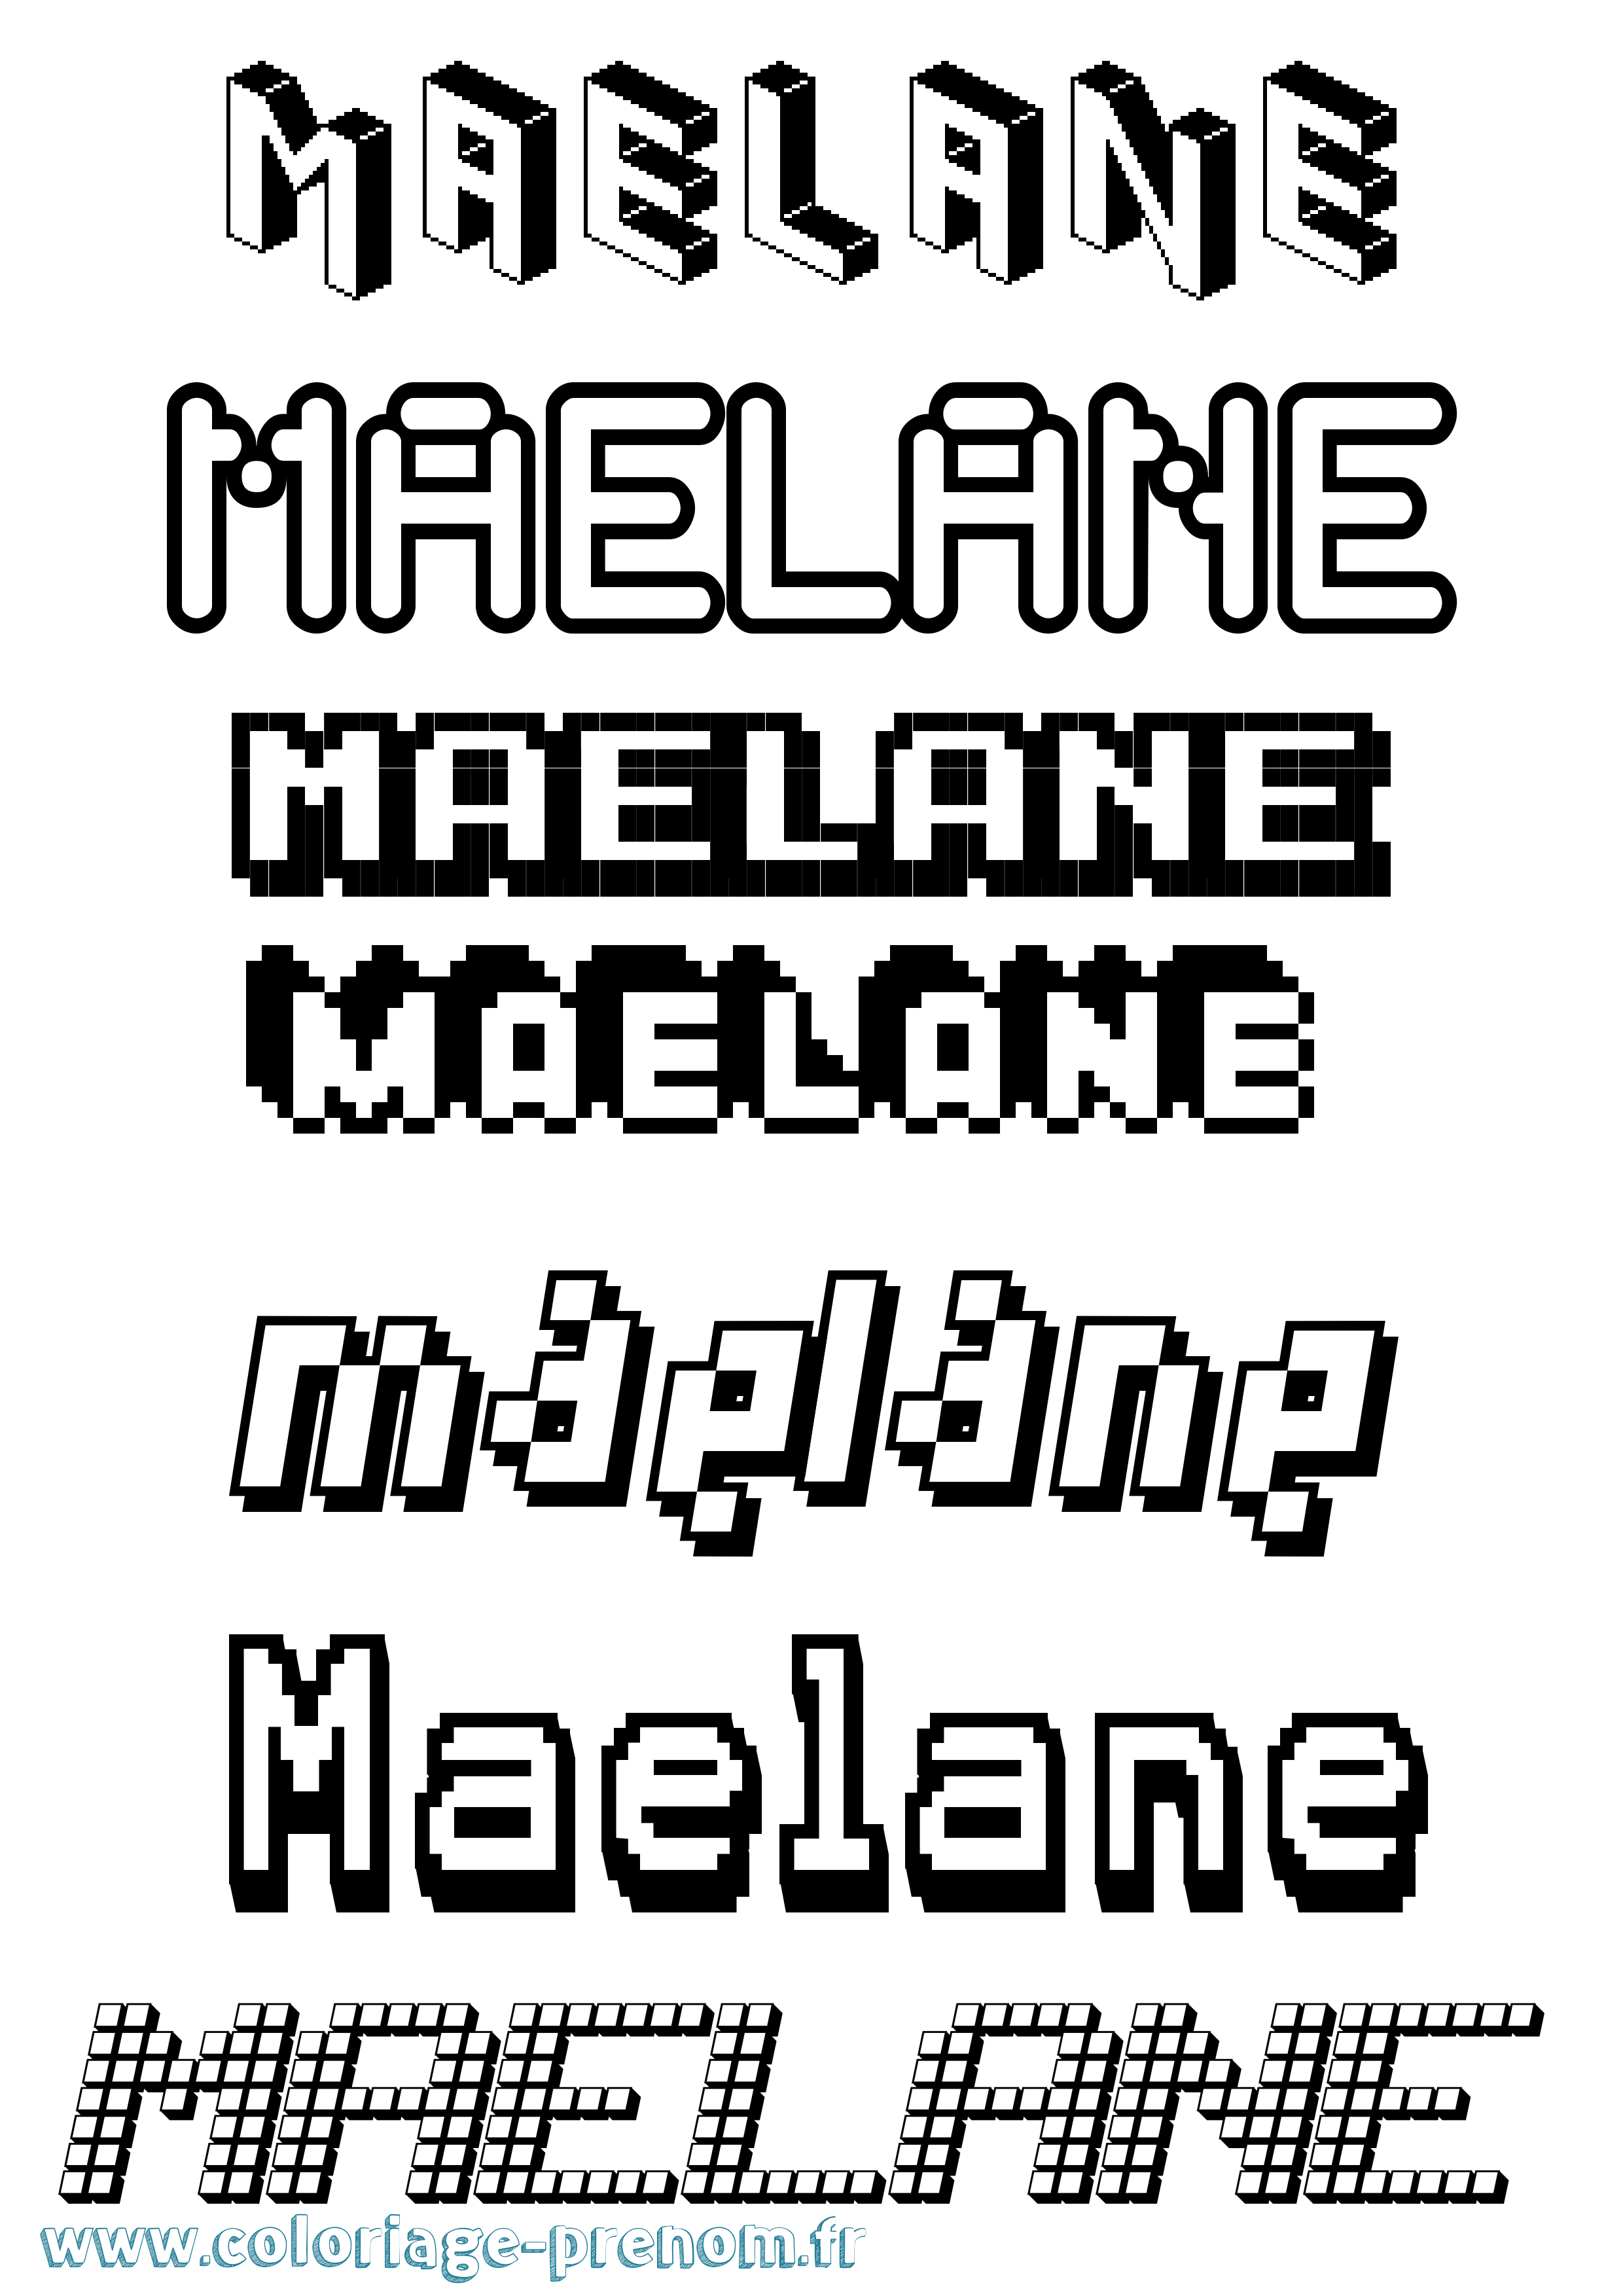 Coloriage prénom Maelane Pixel